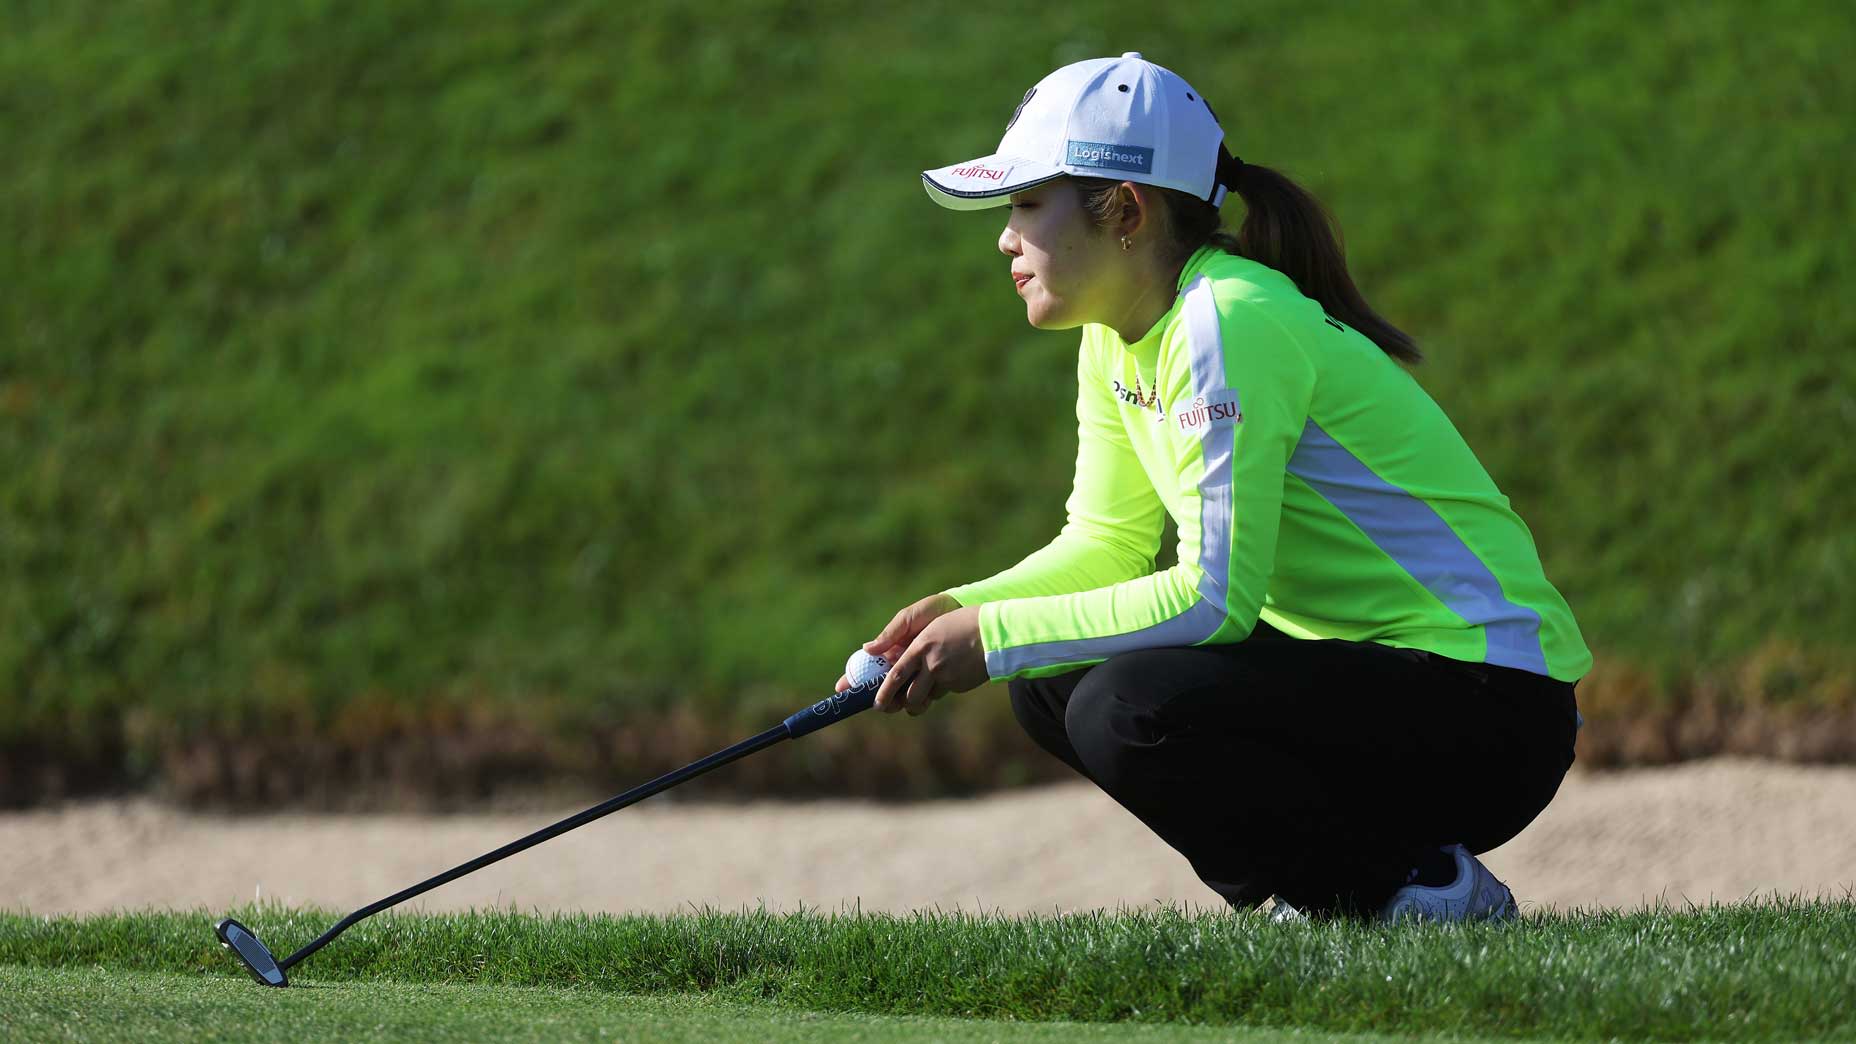 LPGA pro has chance for major bounce-back. She hasn’t missed yet